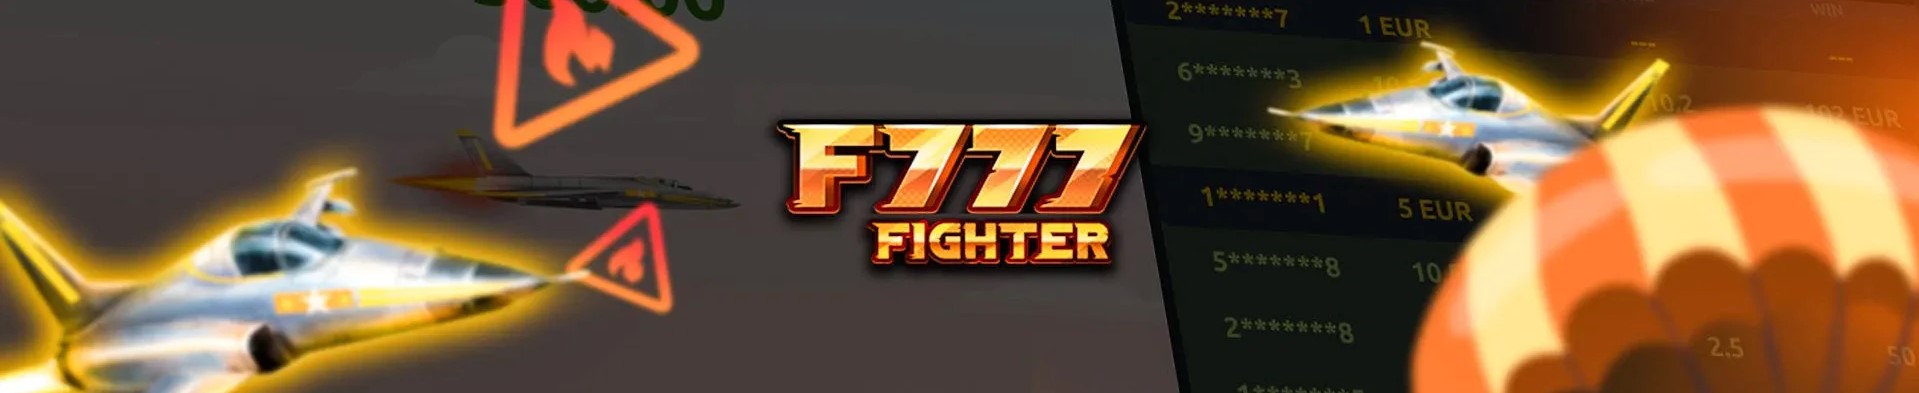 Jogo F777 fighter.